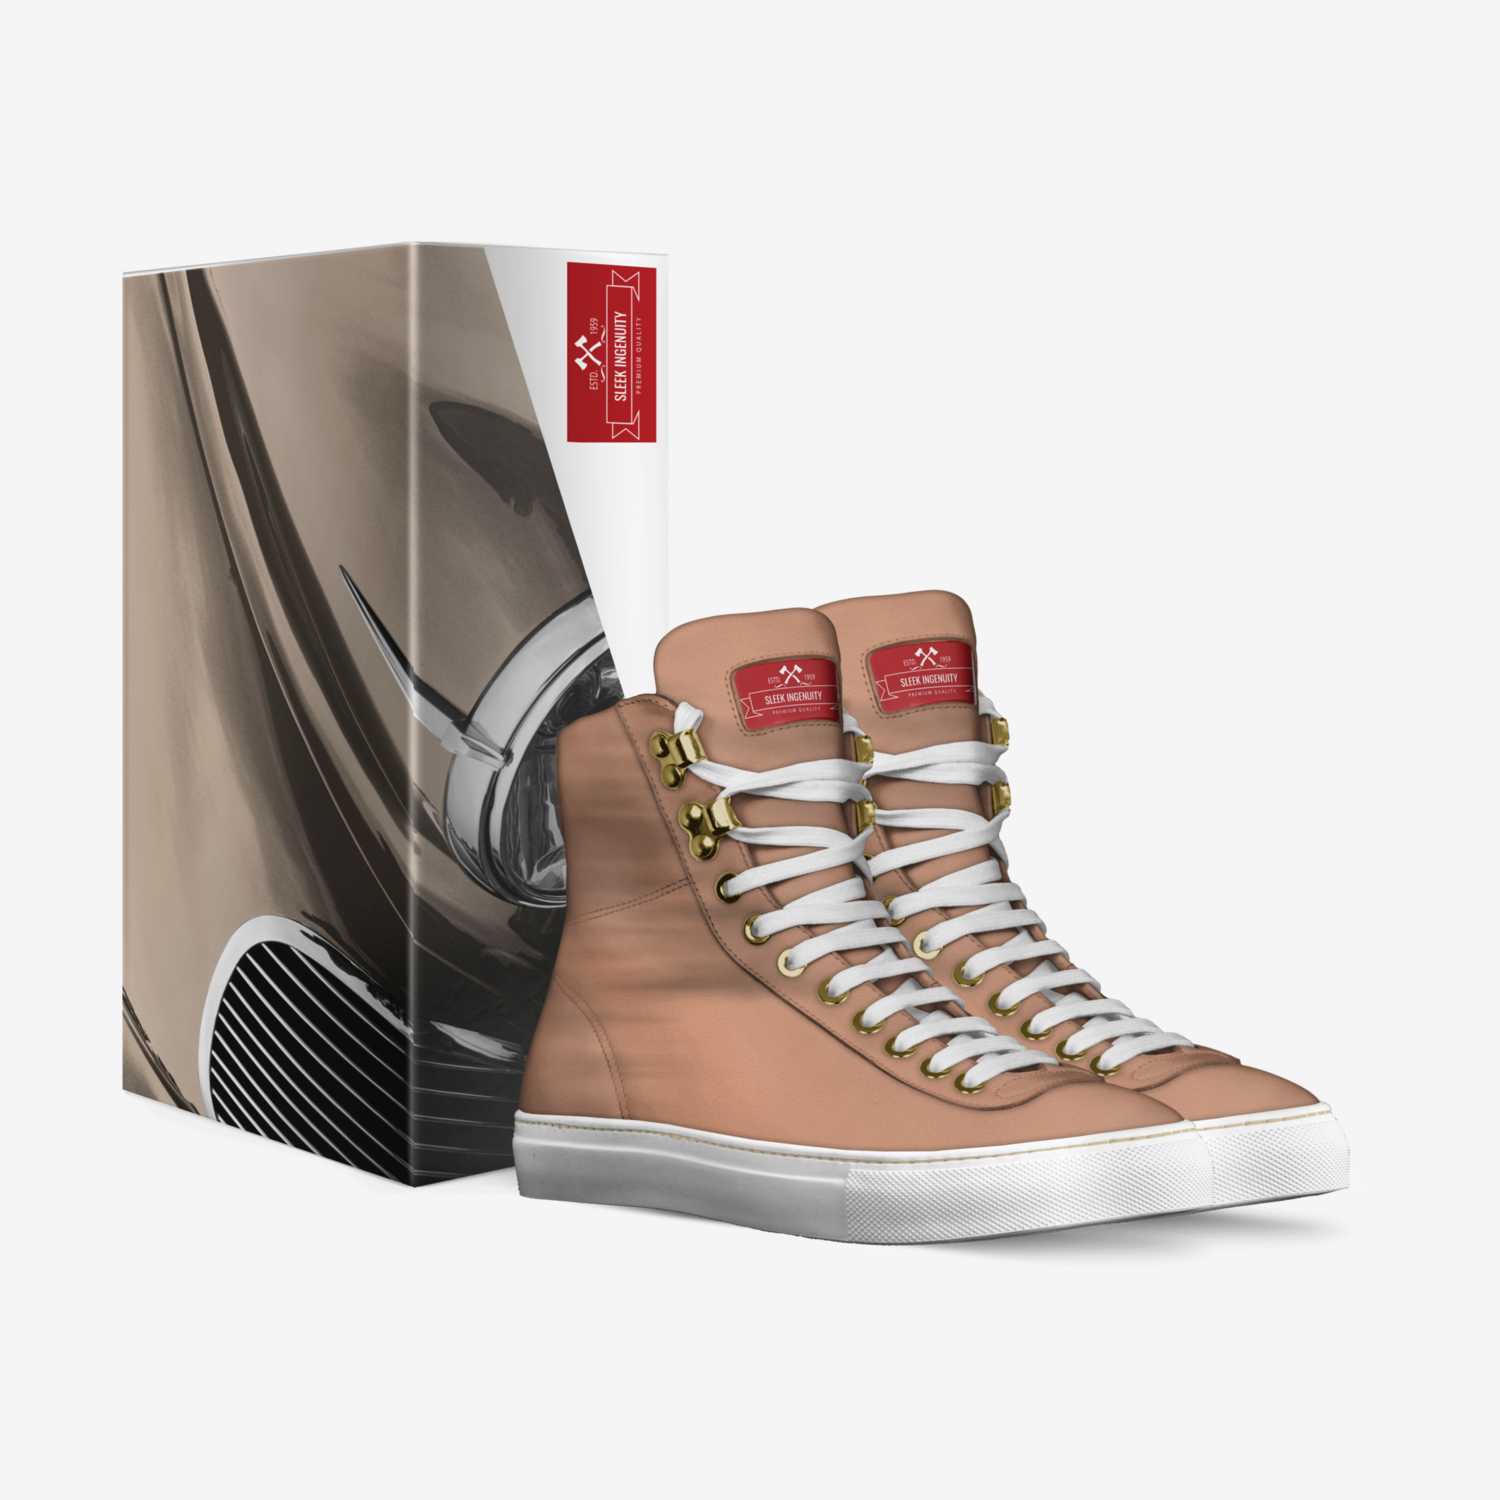 Sleek Ingenuity  custom made in Italy shoes by Matthew Davis | Box view